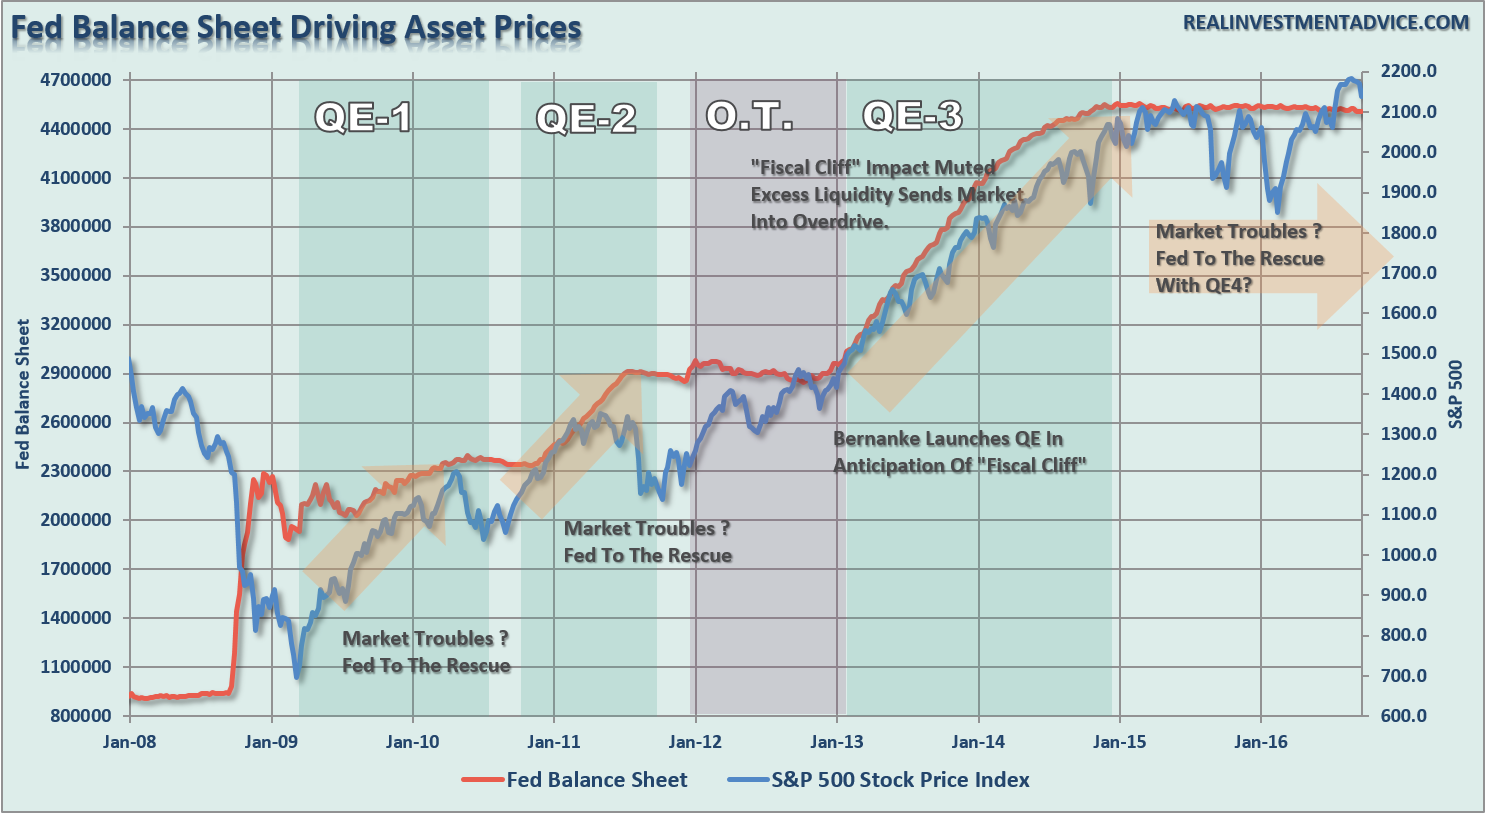 Fed Balance Sheet Driving Asset Prices